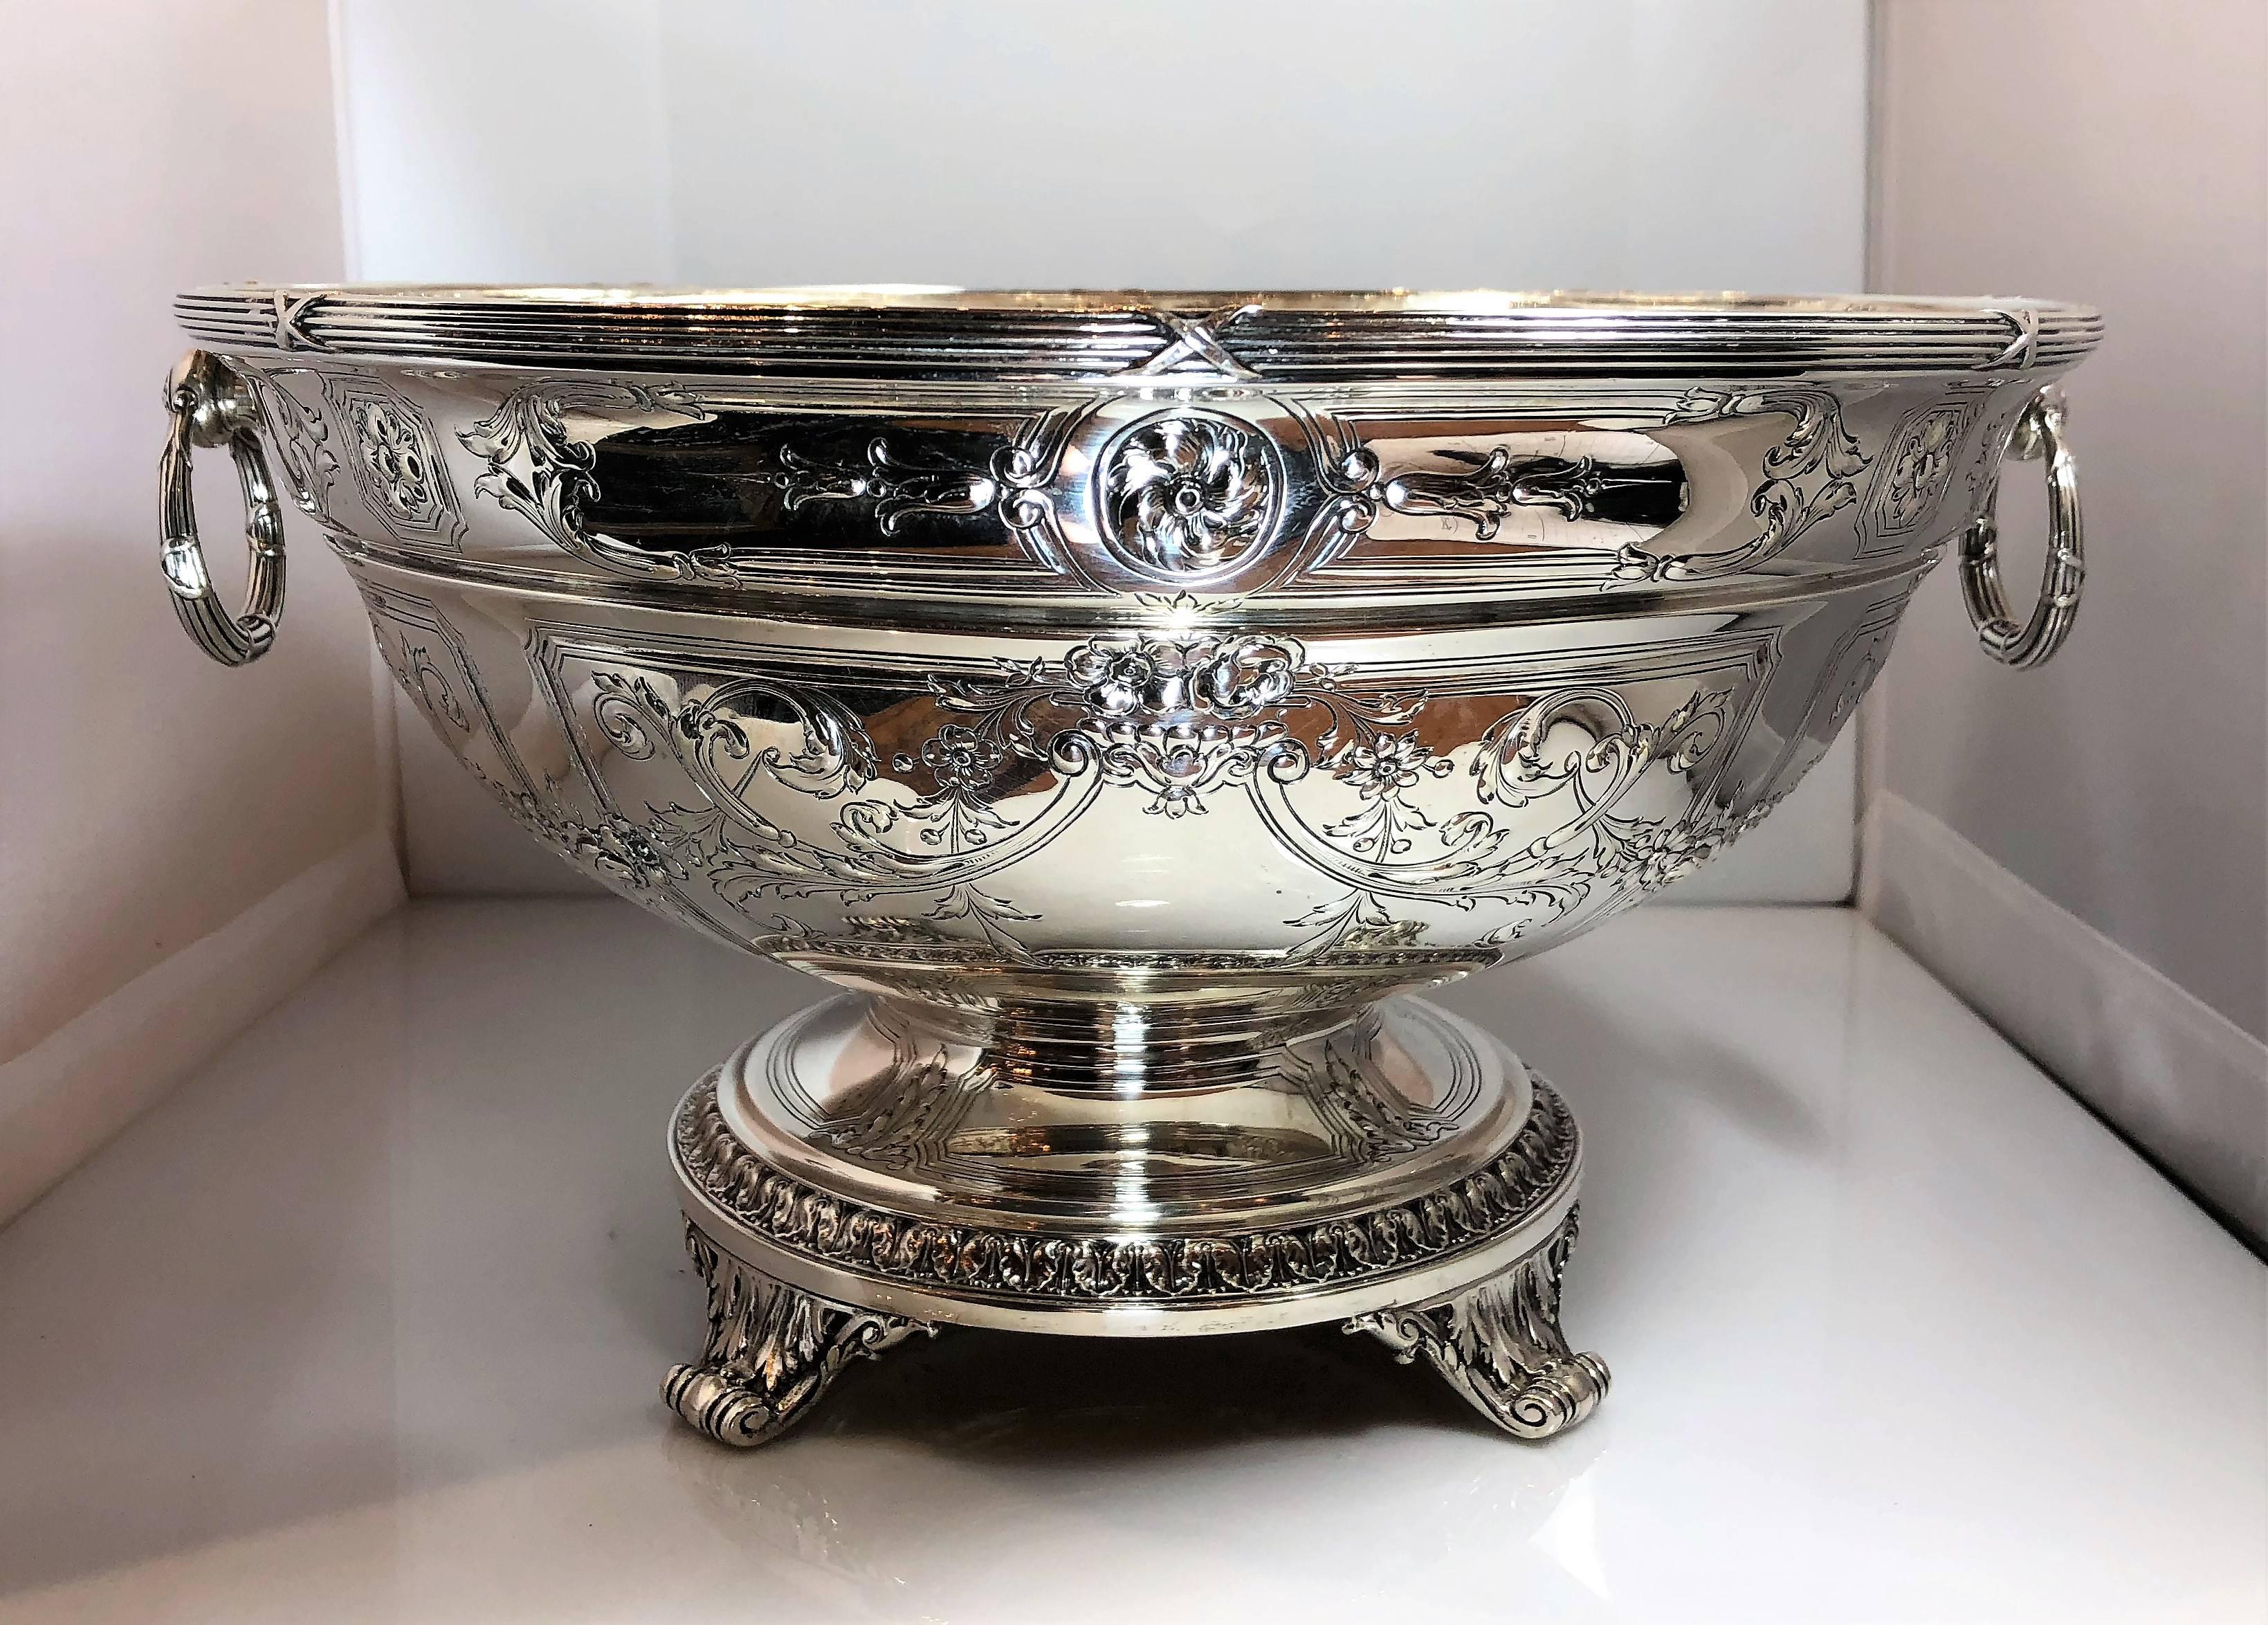 Antique sterling silver American Gorham punch bowl centrepiece, circa 1890-1900.